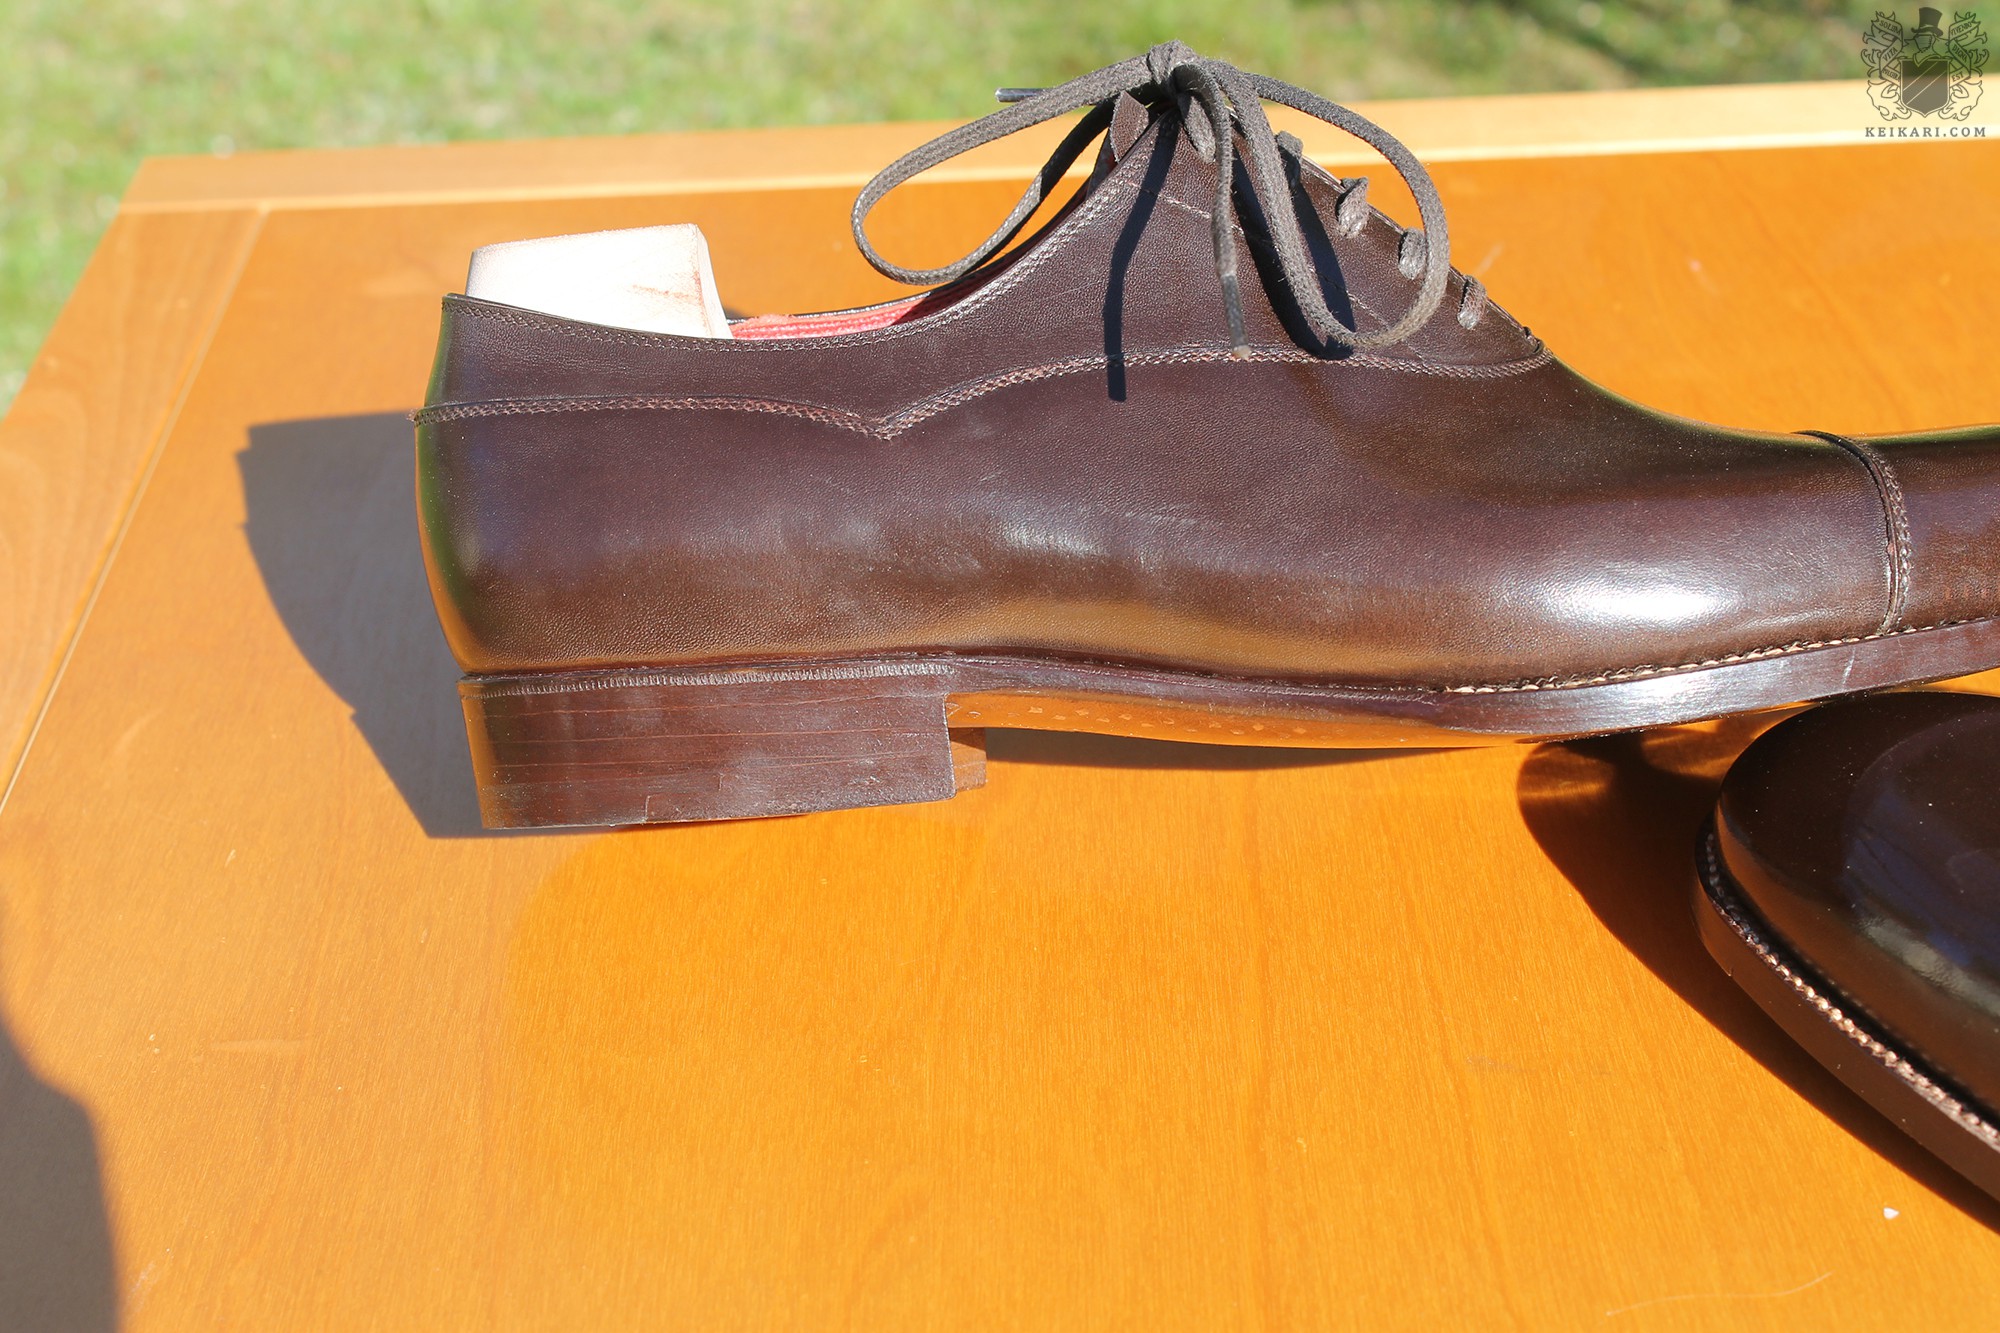 Anatomy_of_Saint_Crispins_shoes_at_Keikari_dot_com12.jpg